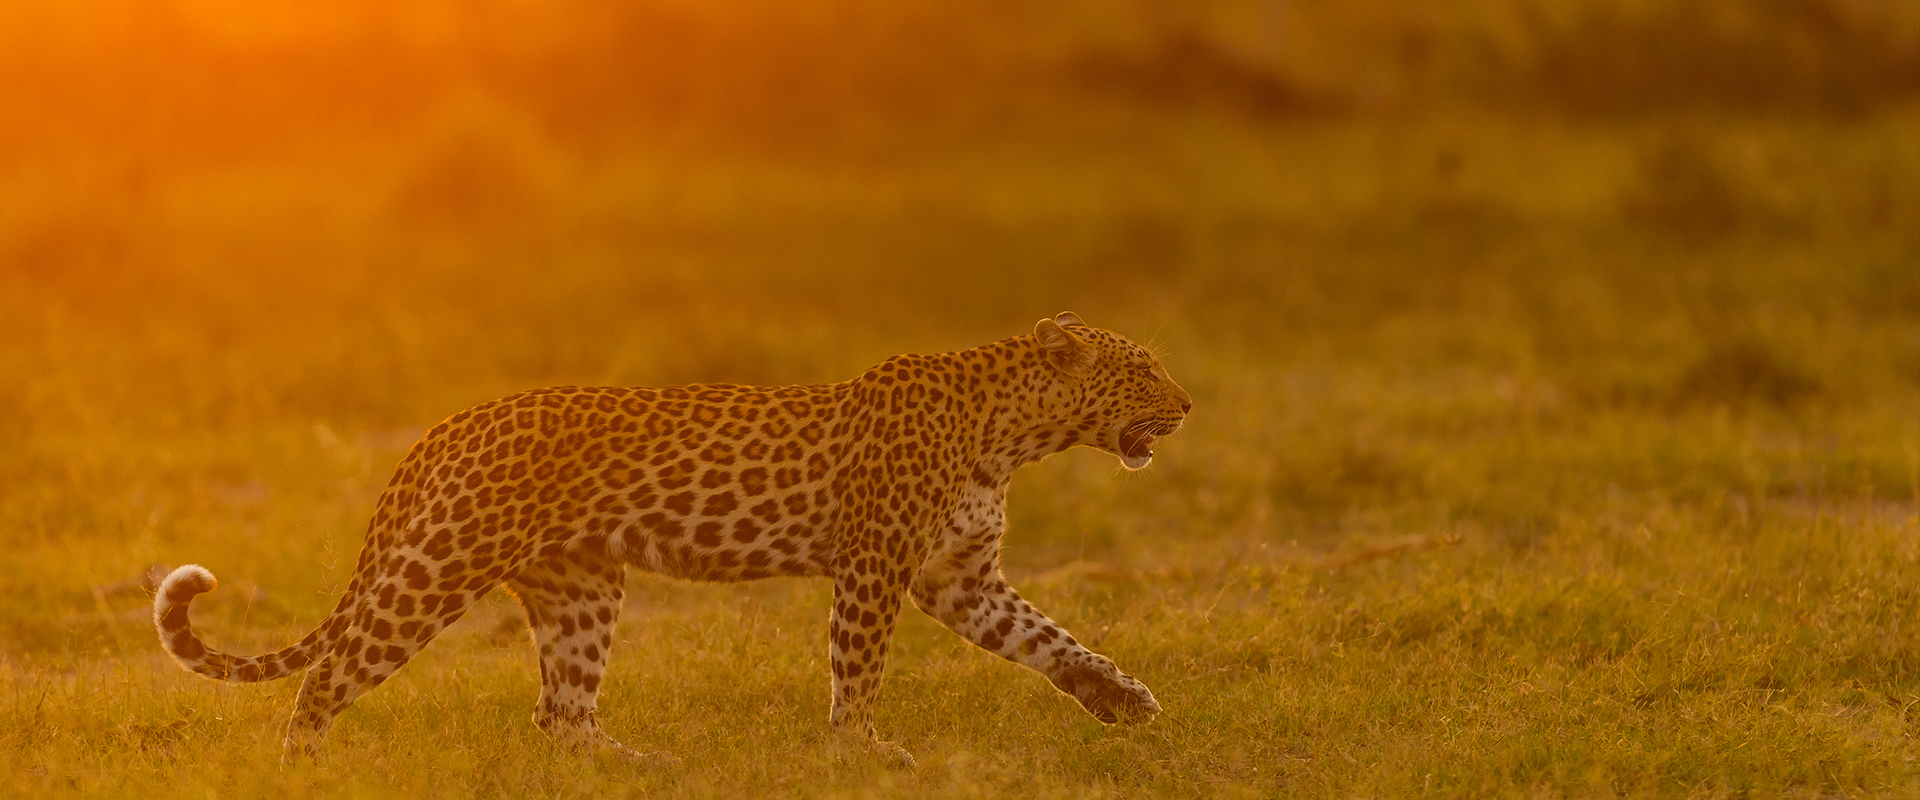 Machaba Web Rates Leopard Sunset 1